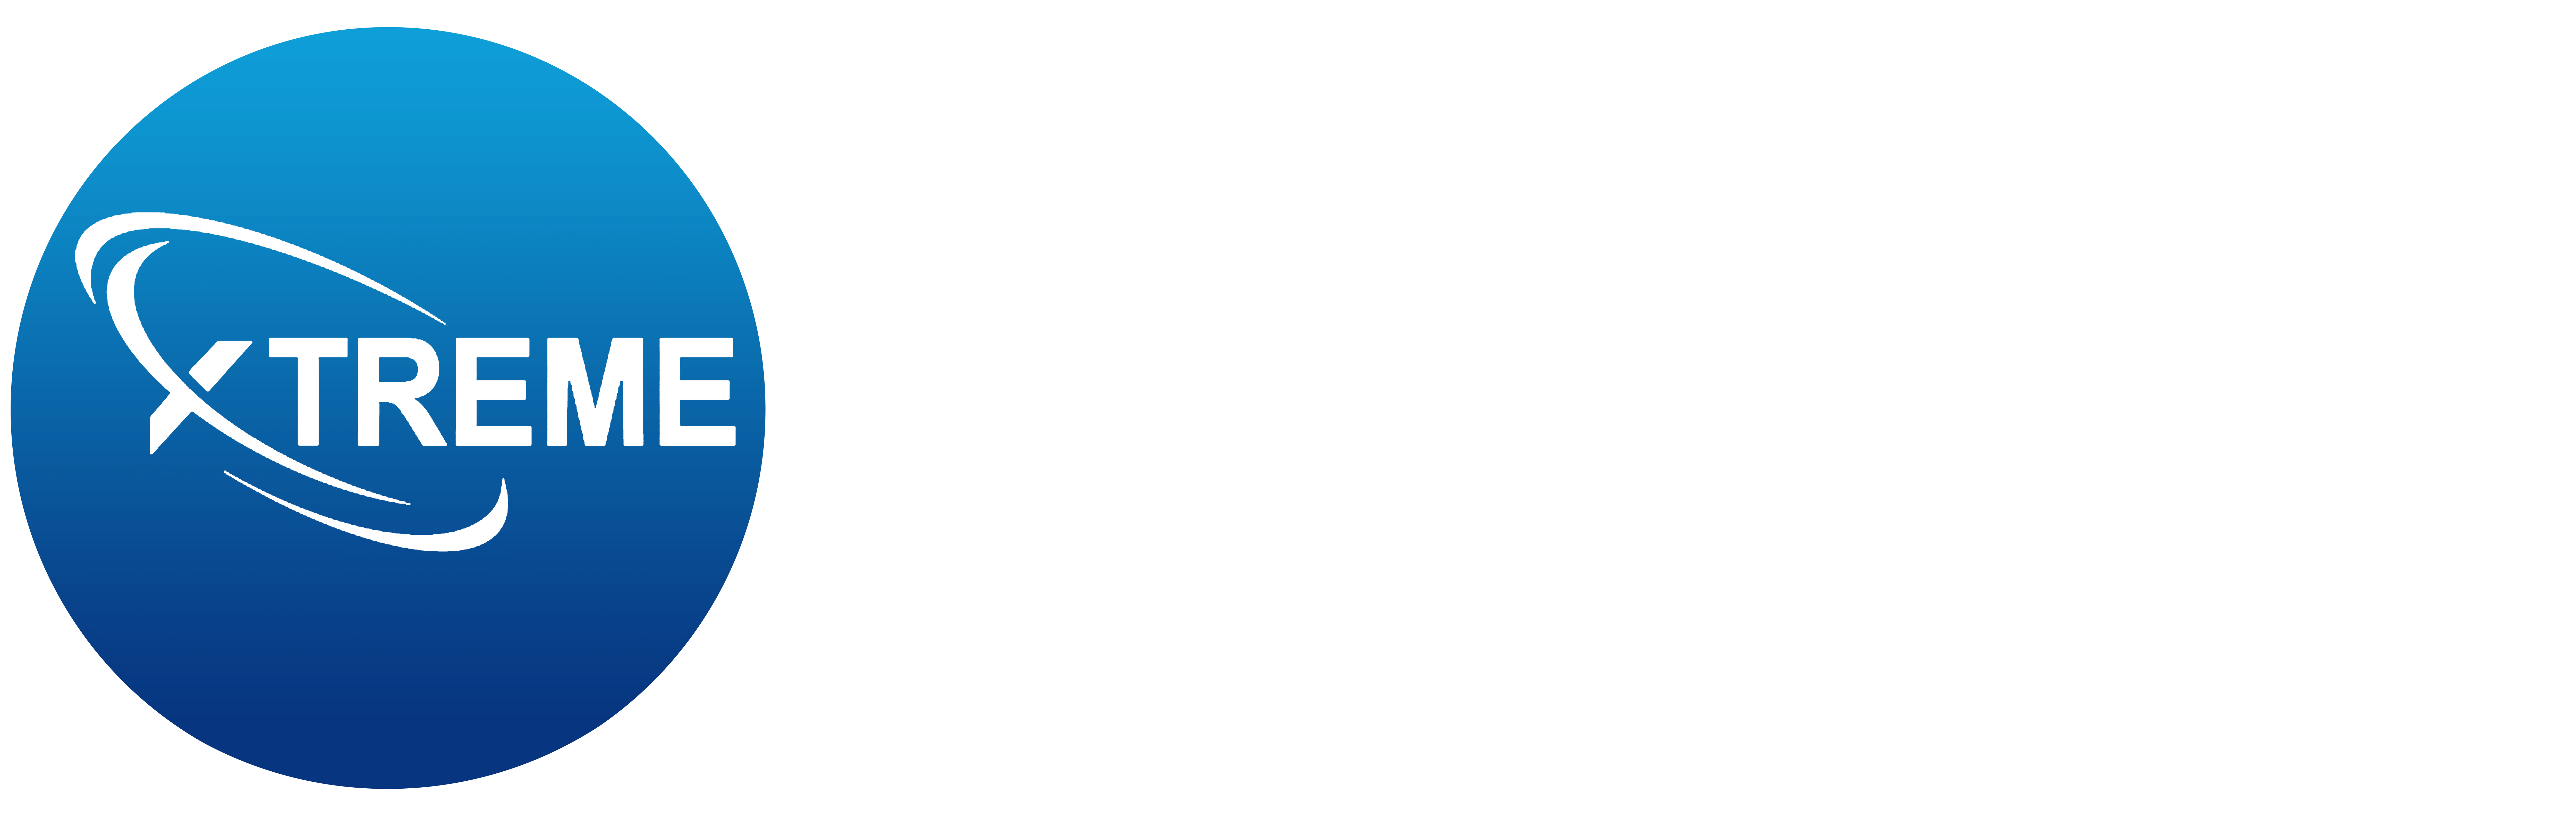 Xtreme-HD-IPTV-Footer-Logo